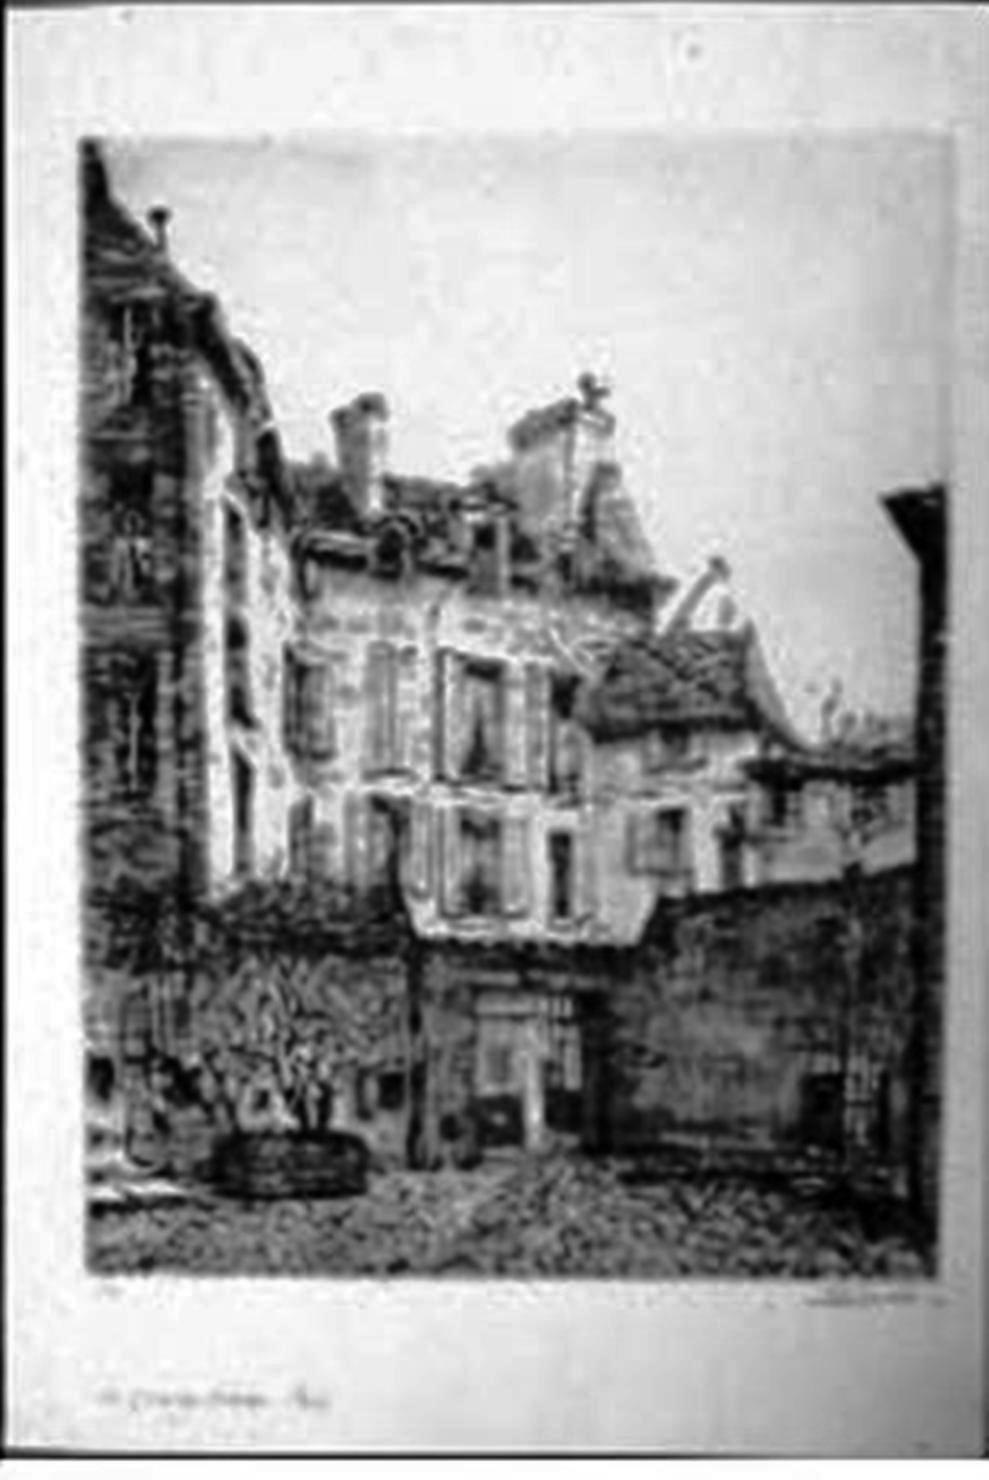 La cour de rouen - paris, veduta di parigi (stampa)